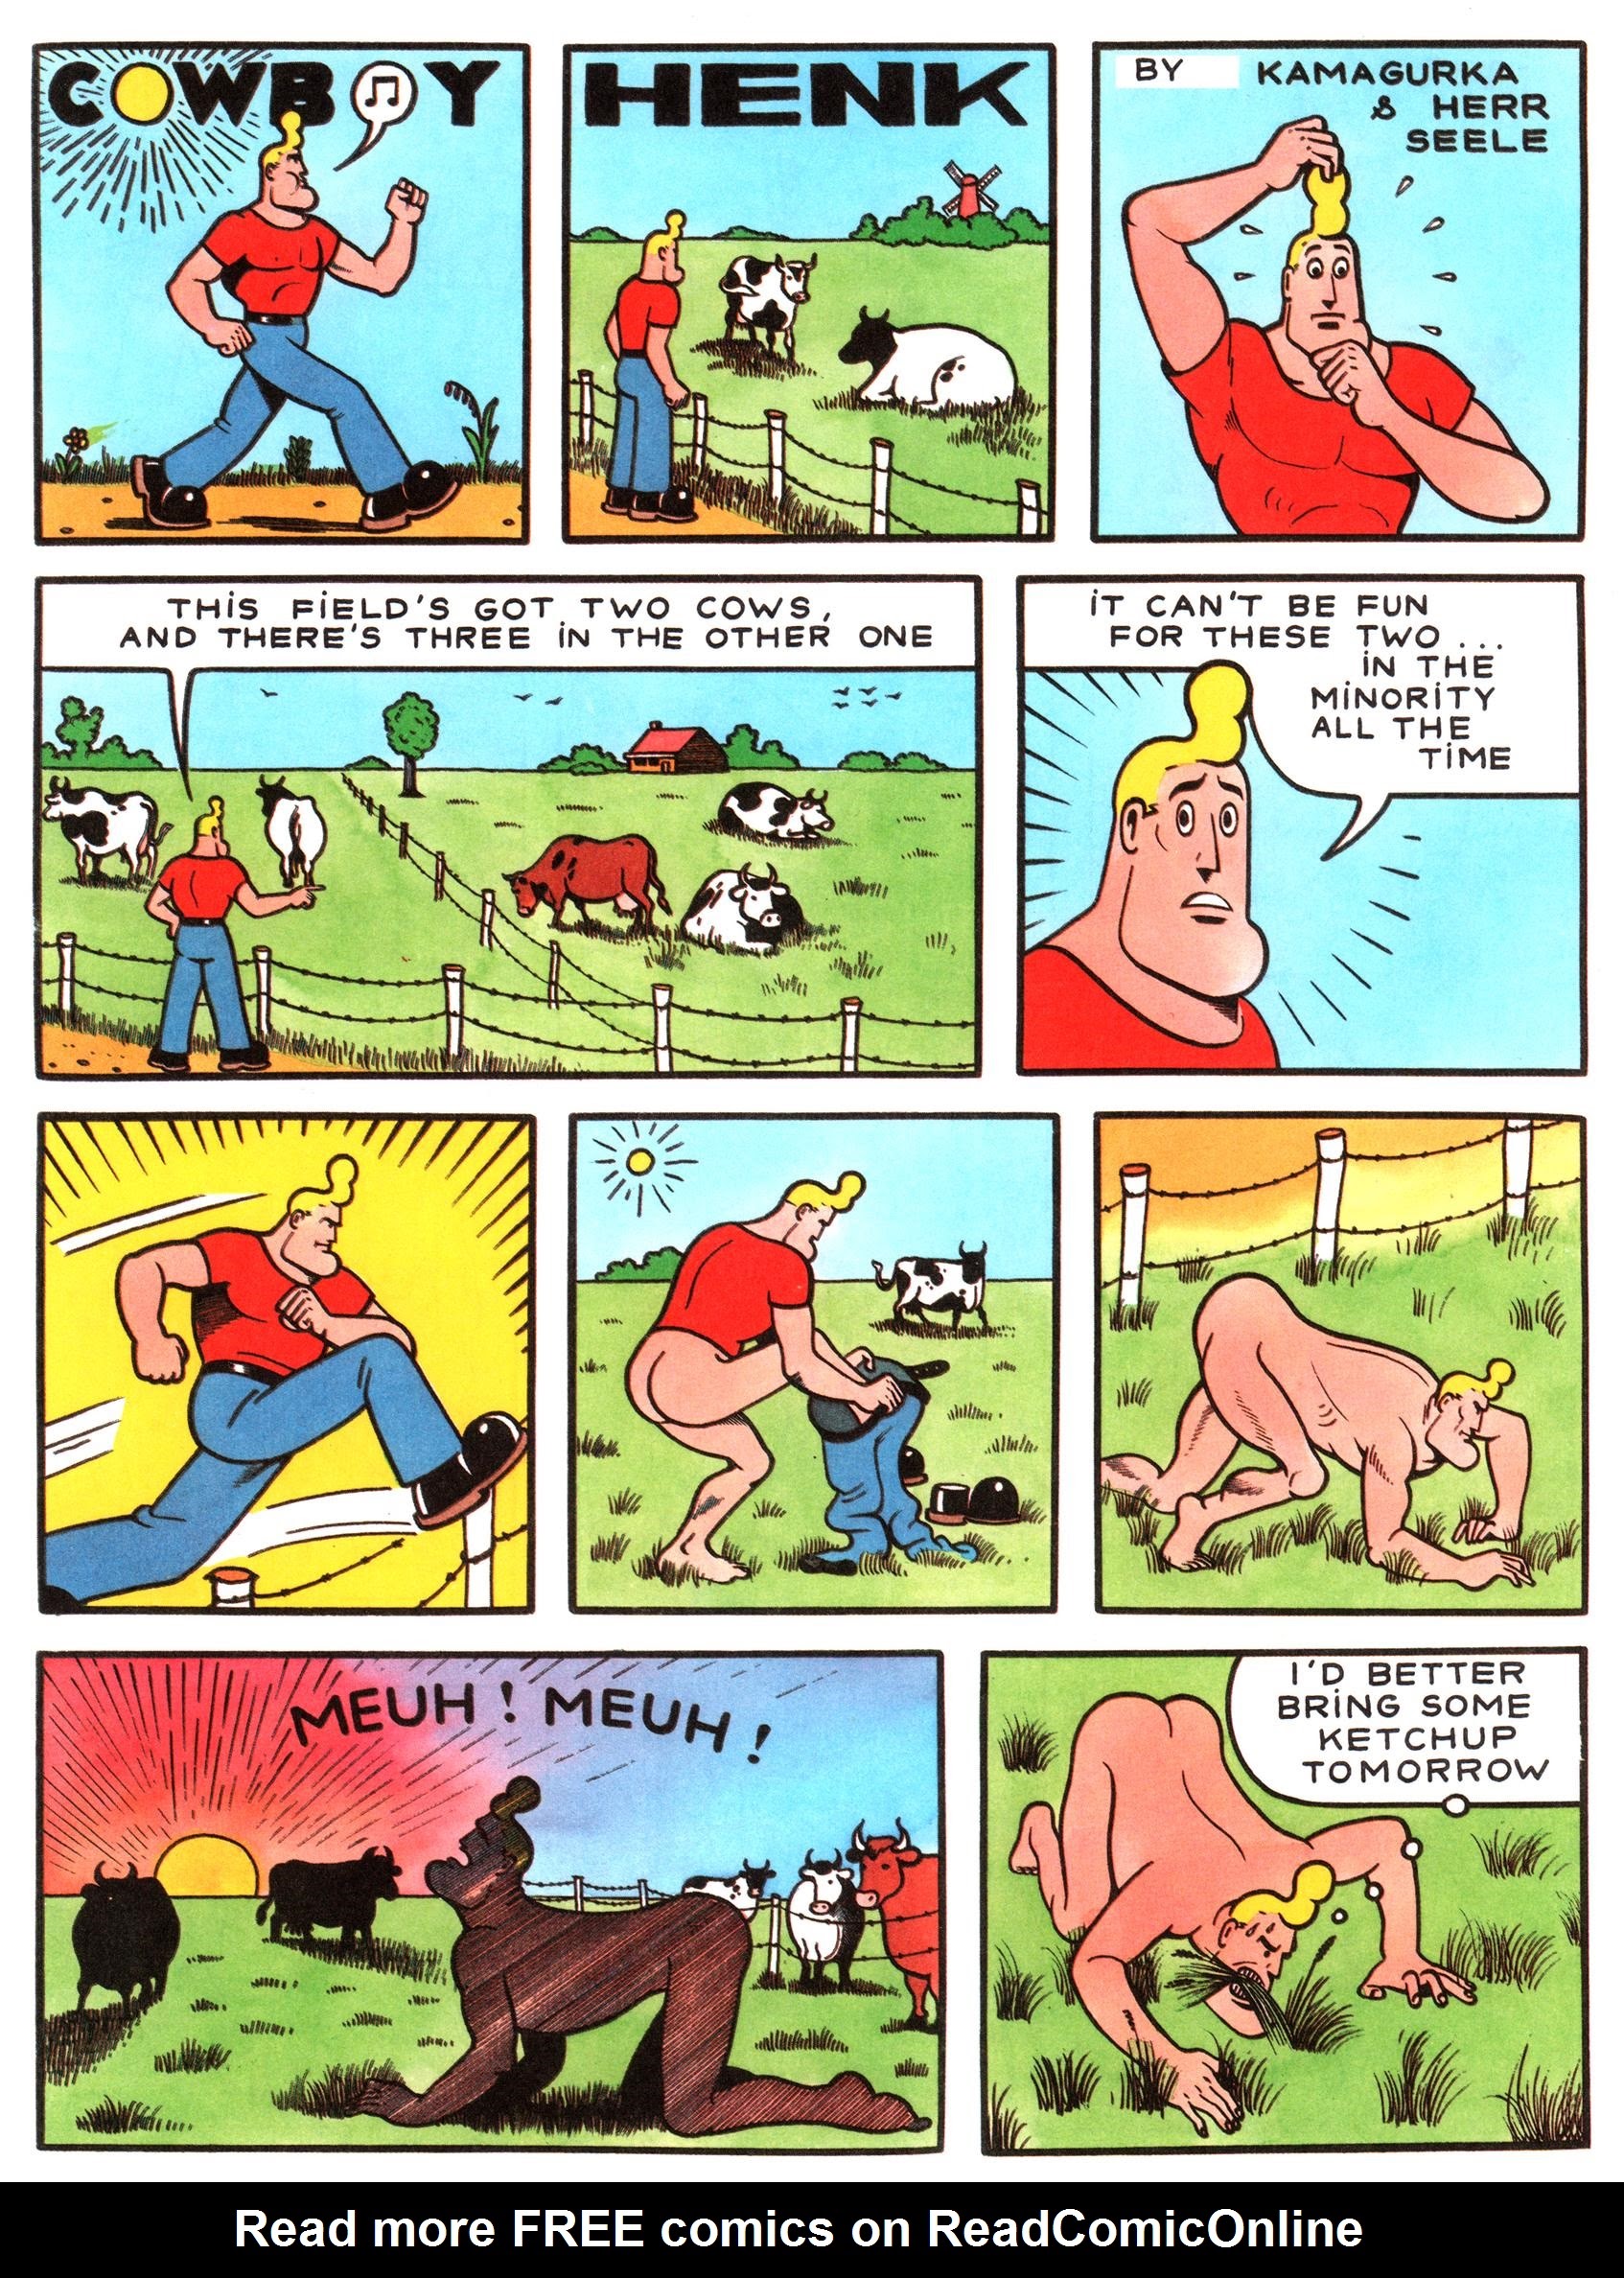 Read online Cowboy Henk: King of Dental Floss comic -  Issue # Full - 27